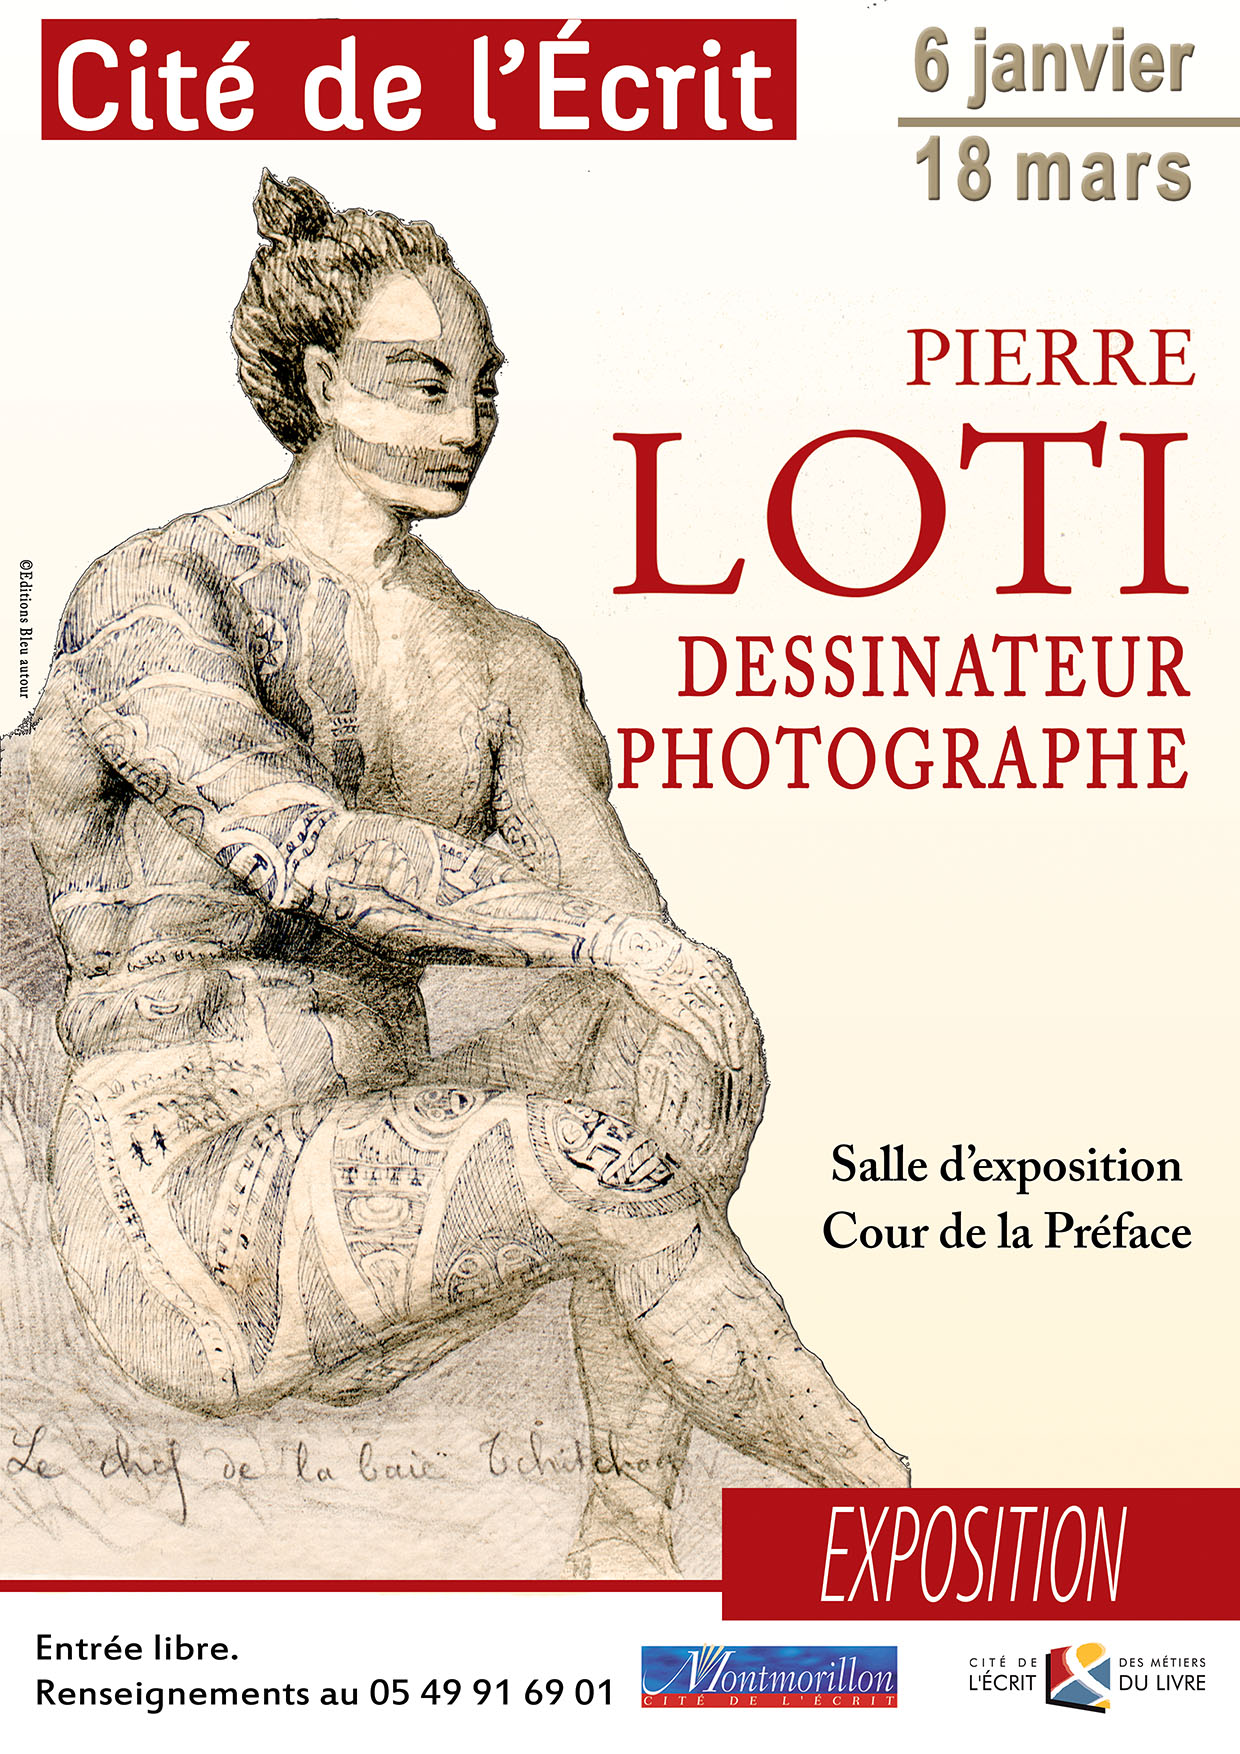 Expo Pierre Loti Dessinateur-Photographe Montmorillon